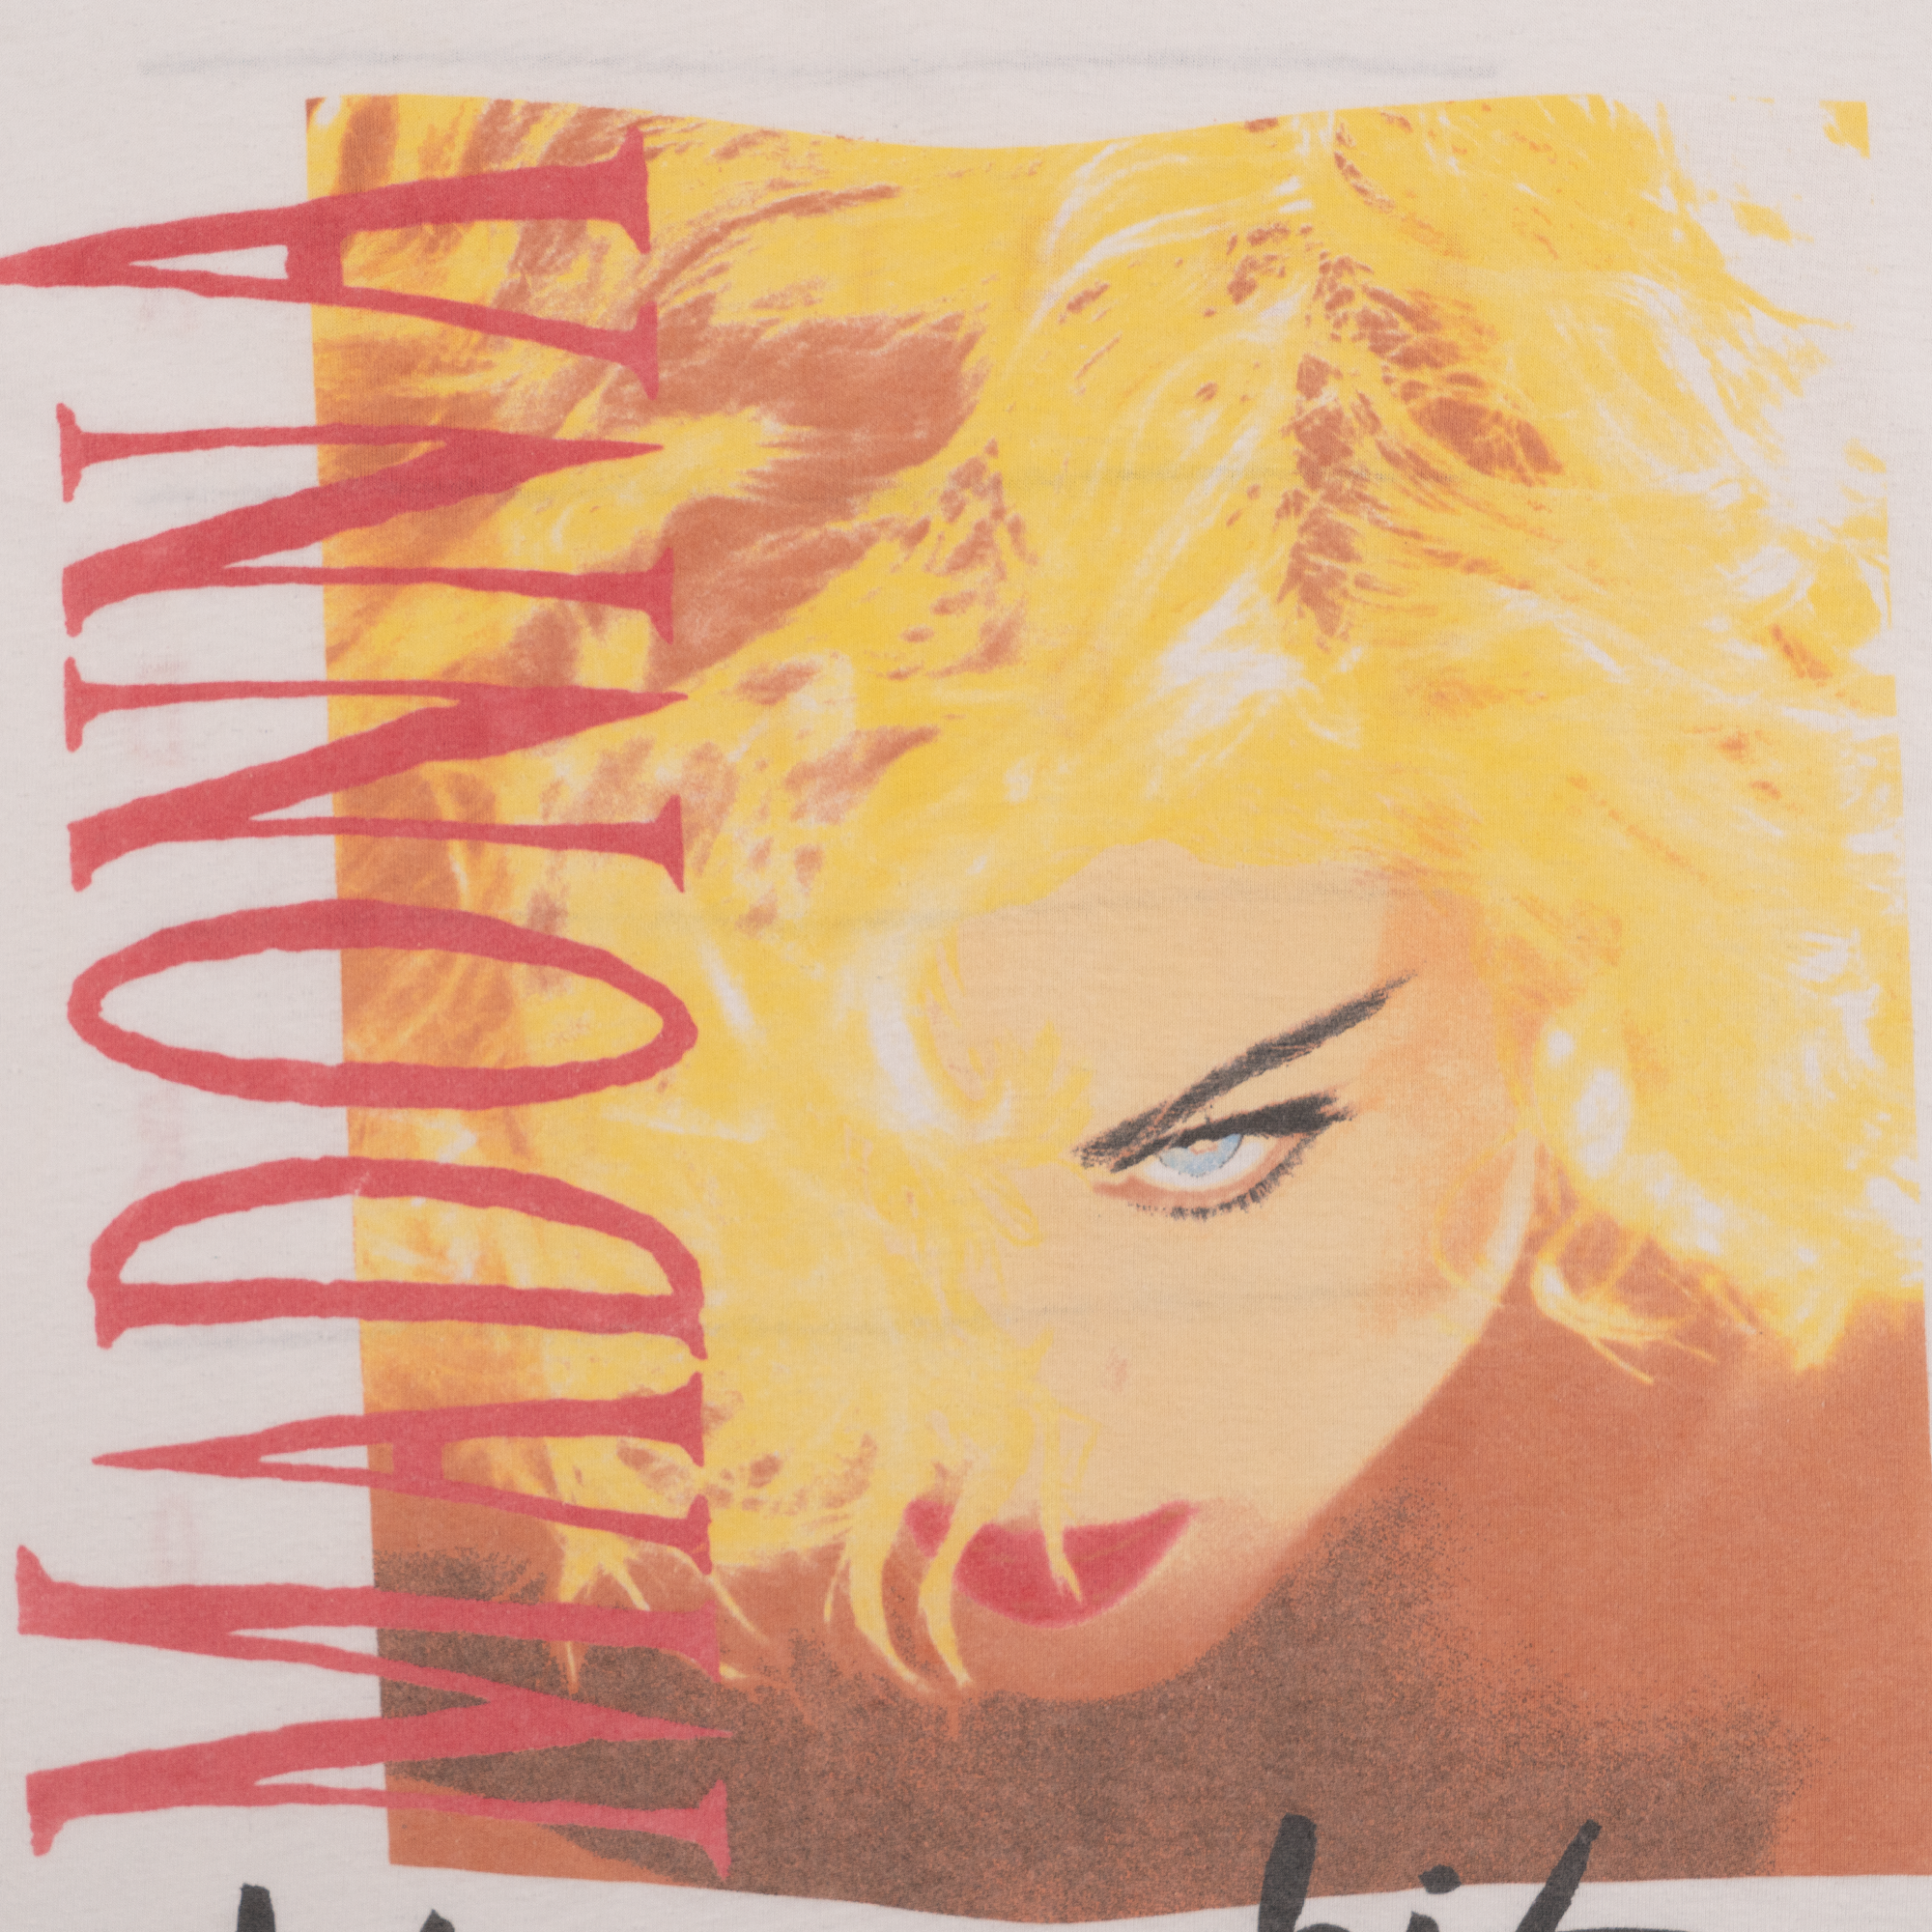 Madonna Blond Ambition Tour 1990 Tee White-PLUS